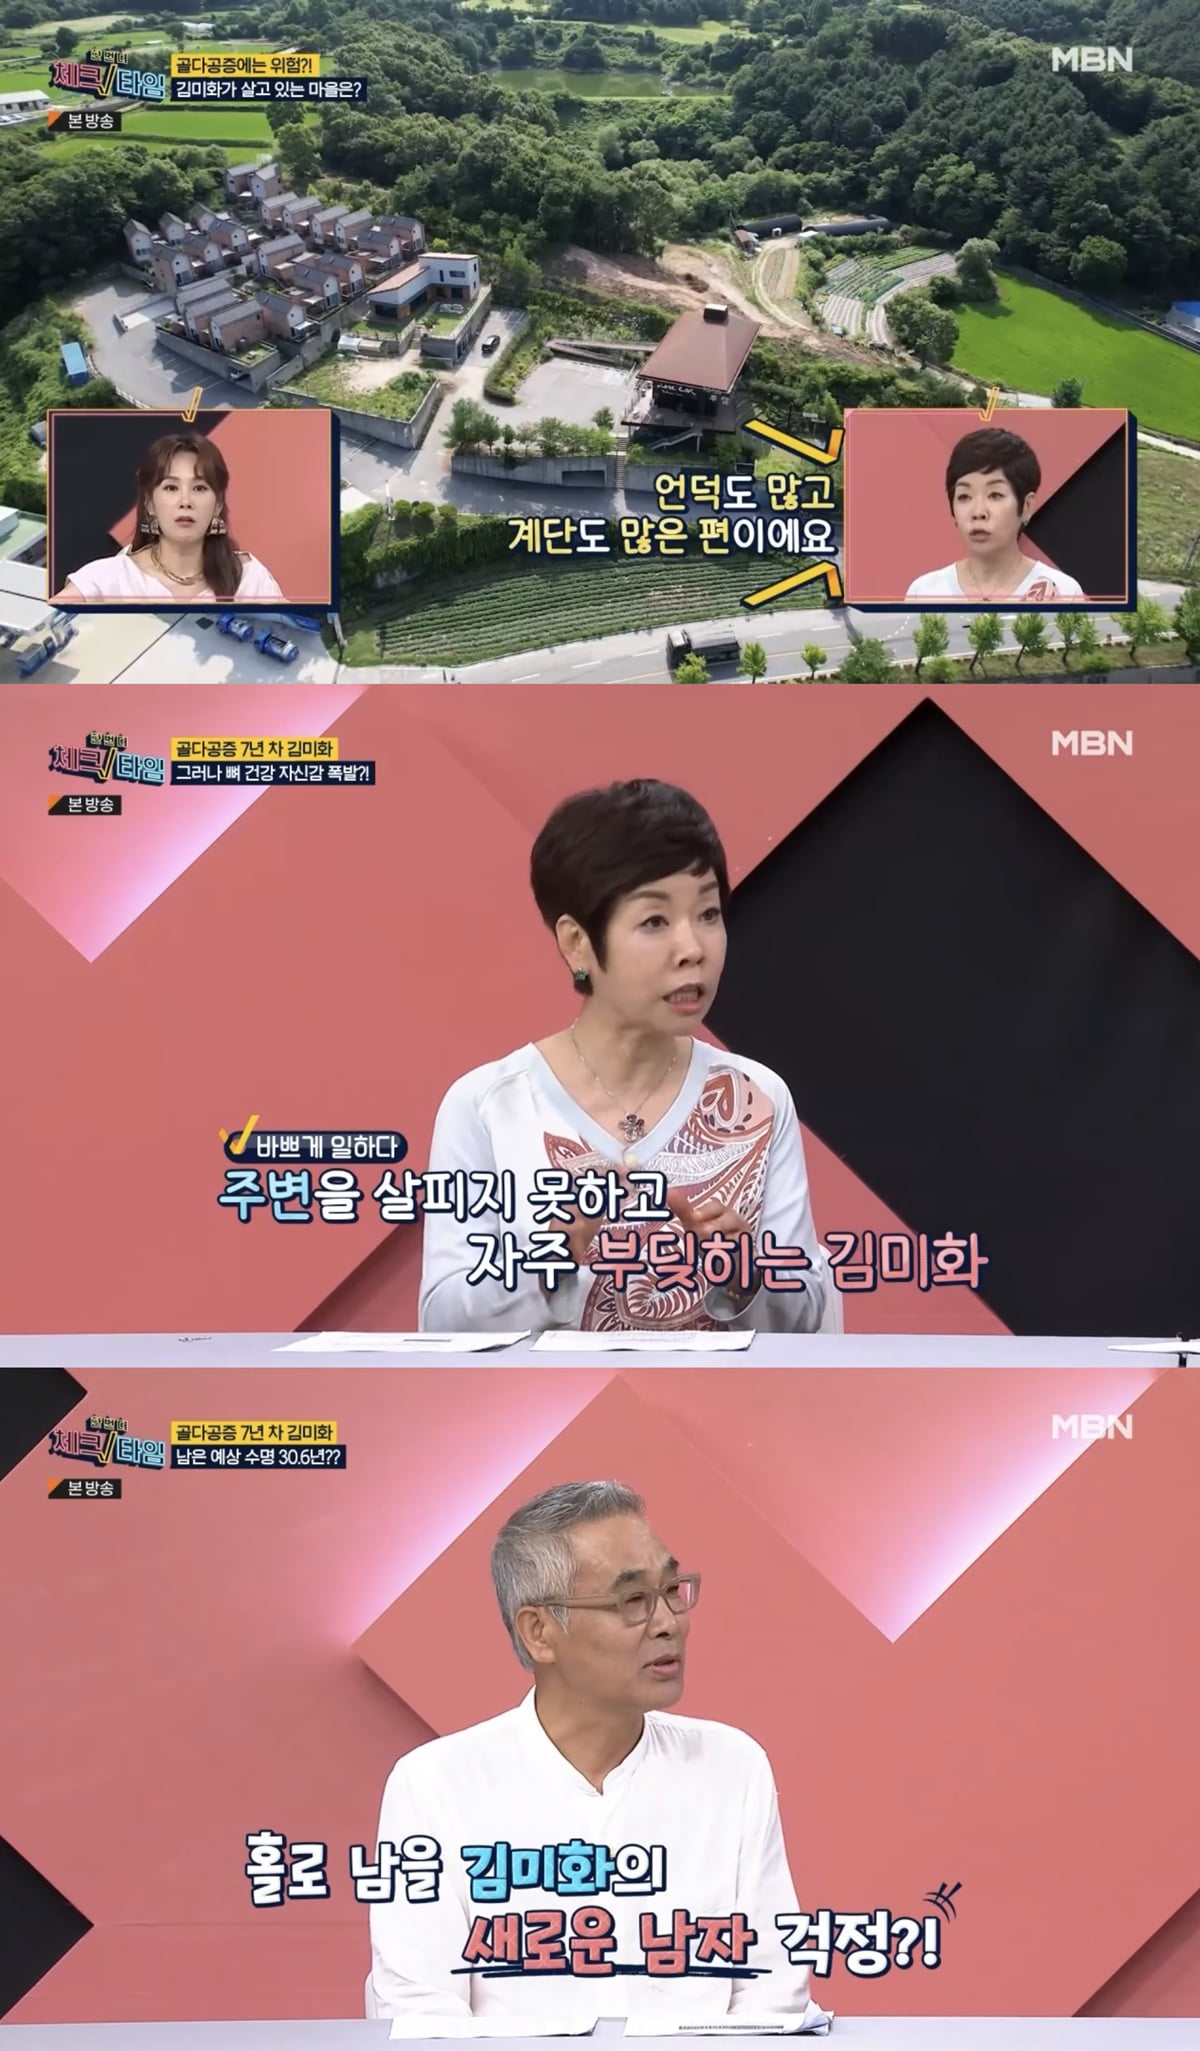 58-year-old Kim Mi-hwa, not worried about breaking bones